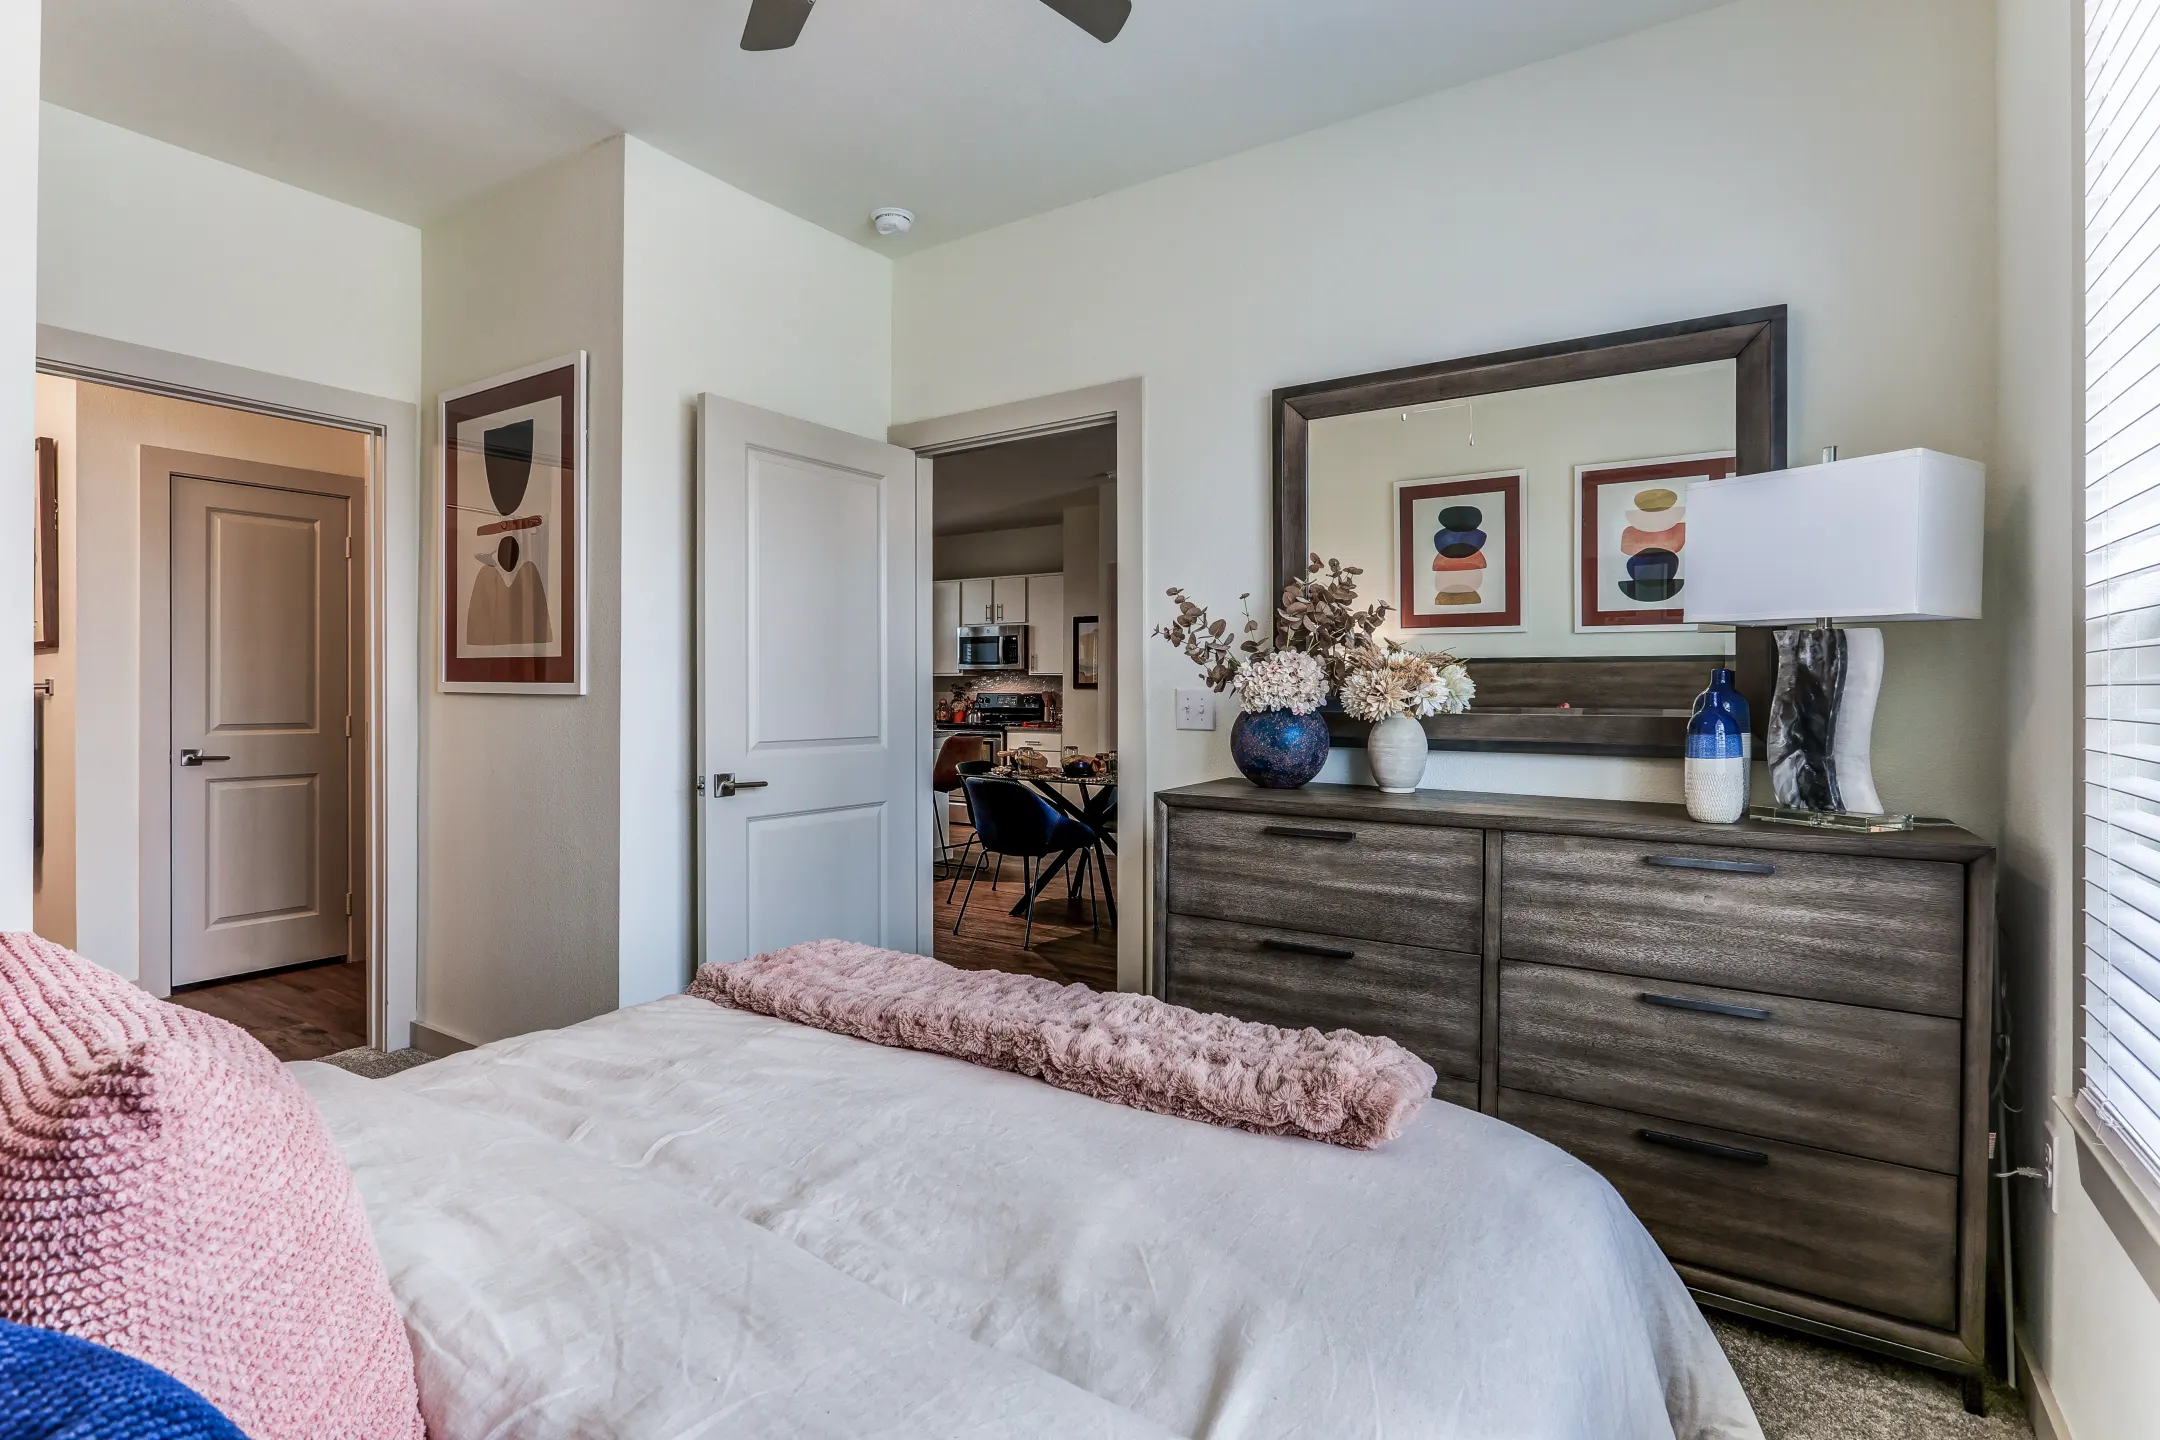 Bedroom - Home at Waller - Waller, TX